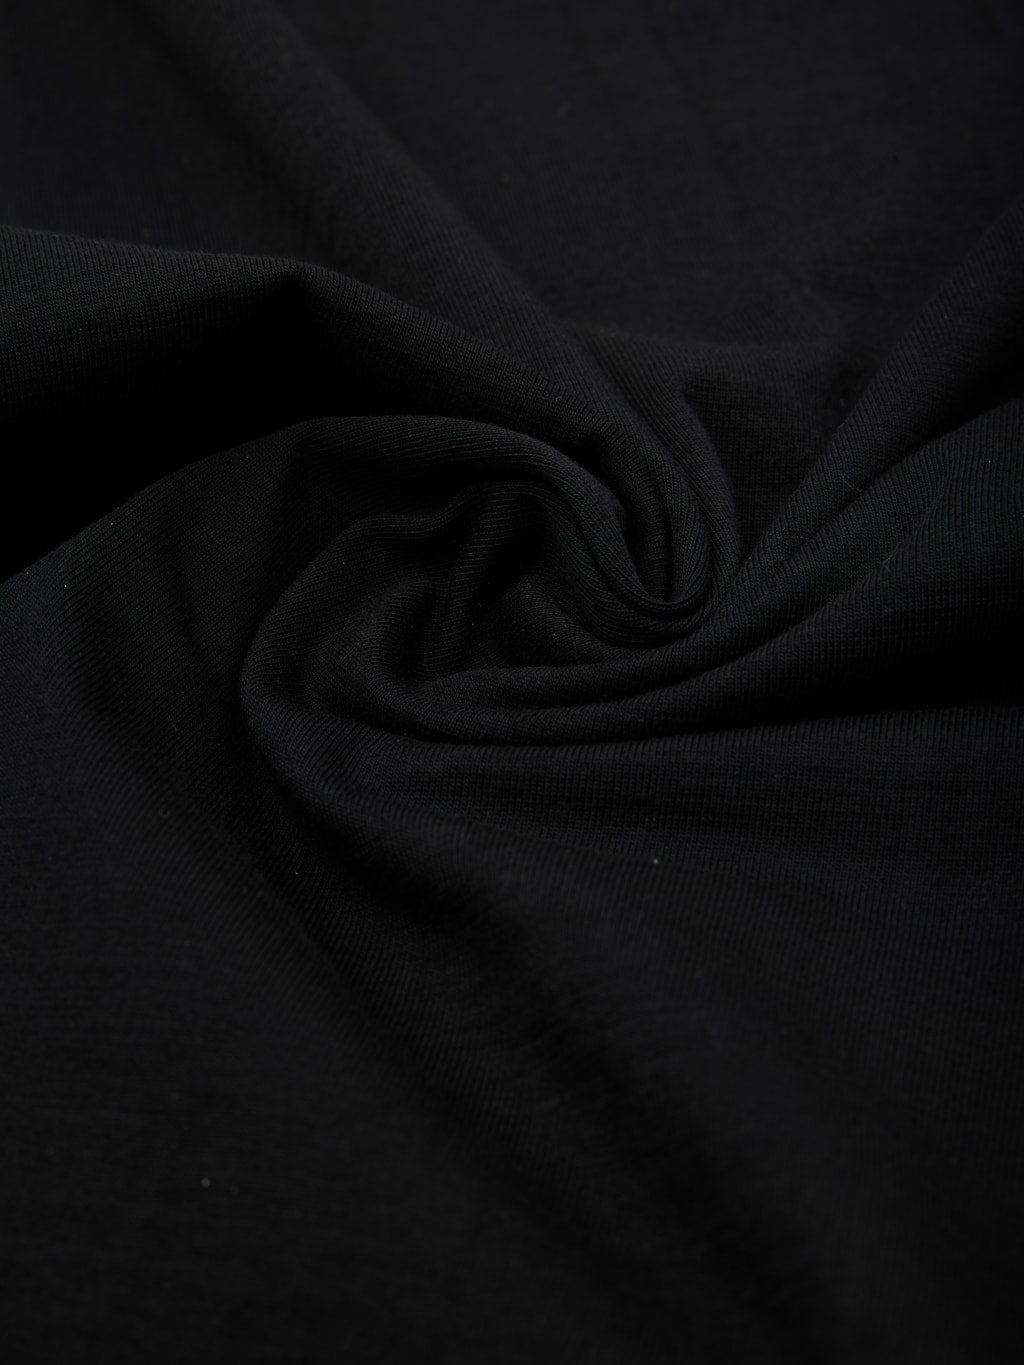 merz b schwanen good originals loopwheeled Tshirt classic fit black texture